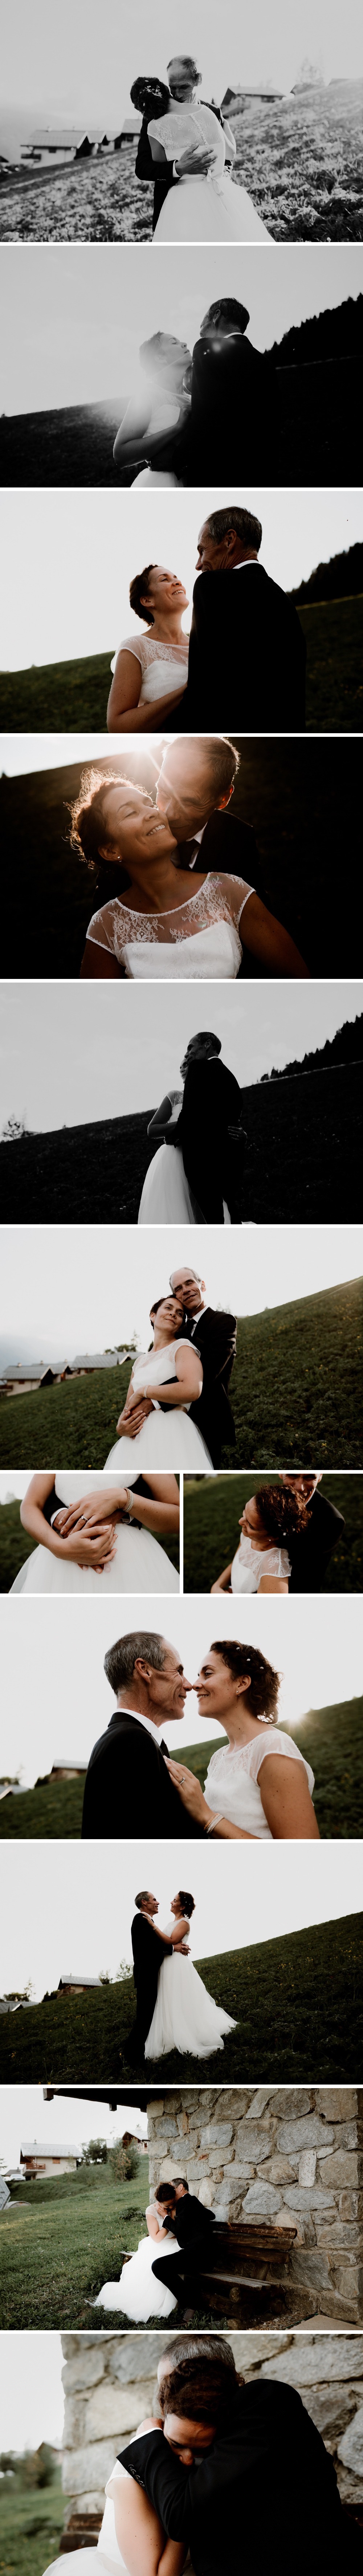 Photographe mariage au mont blanc